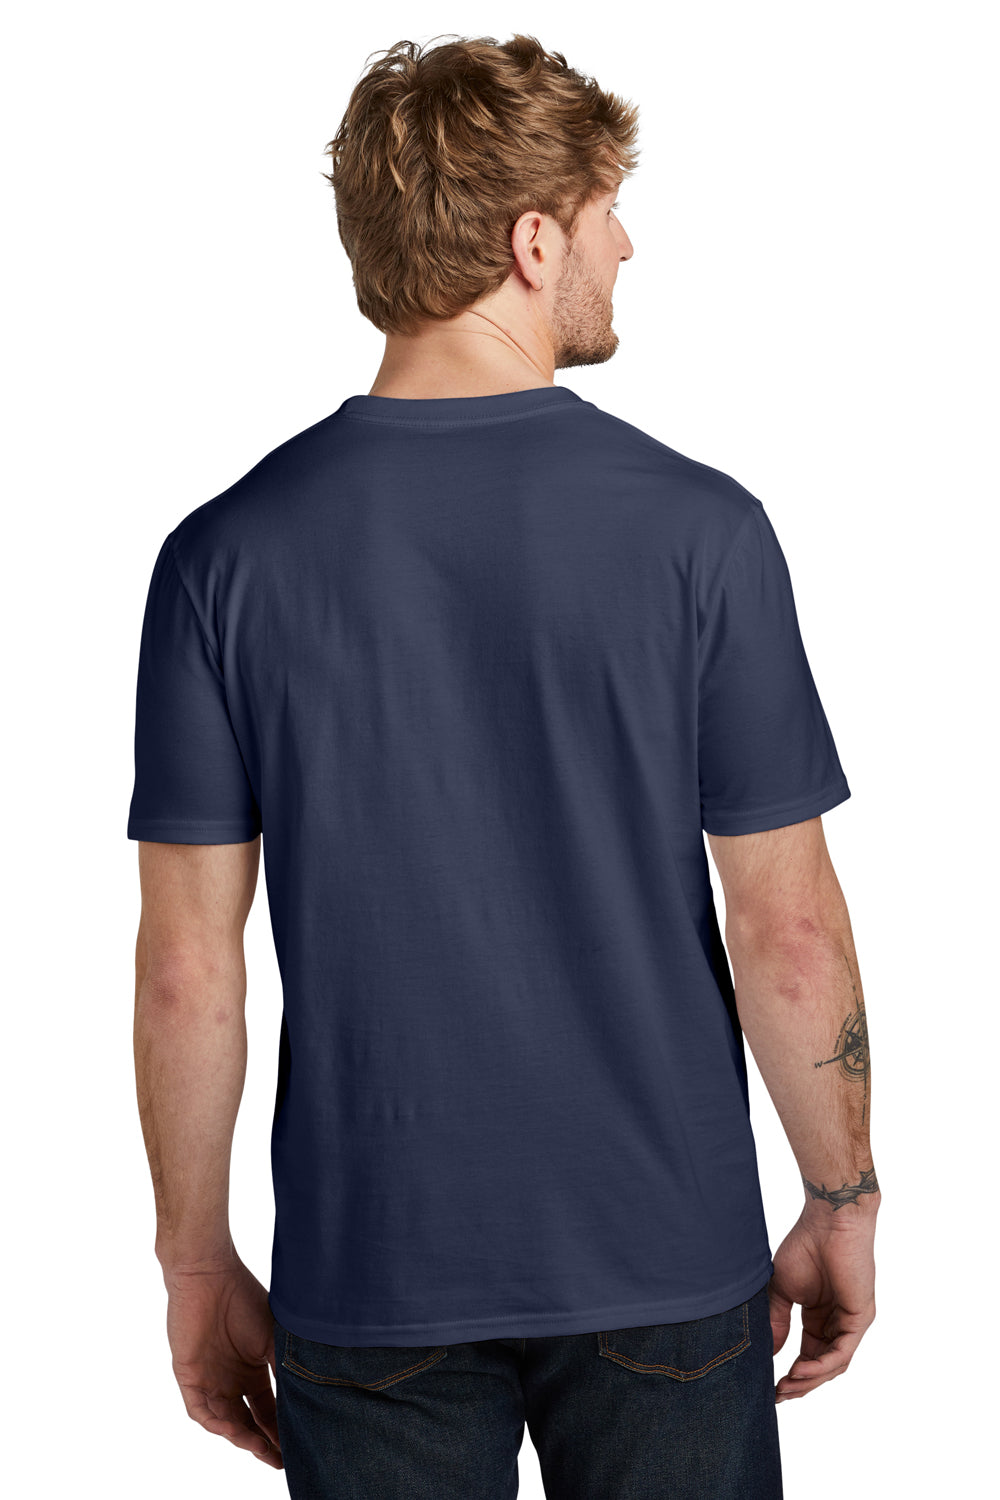 Volunteer Knitwear VL45 Daily Short Sleeve Crewneck T-Shirt Strong Navy Blue Back